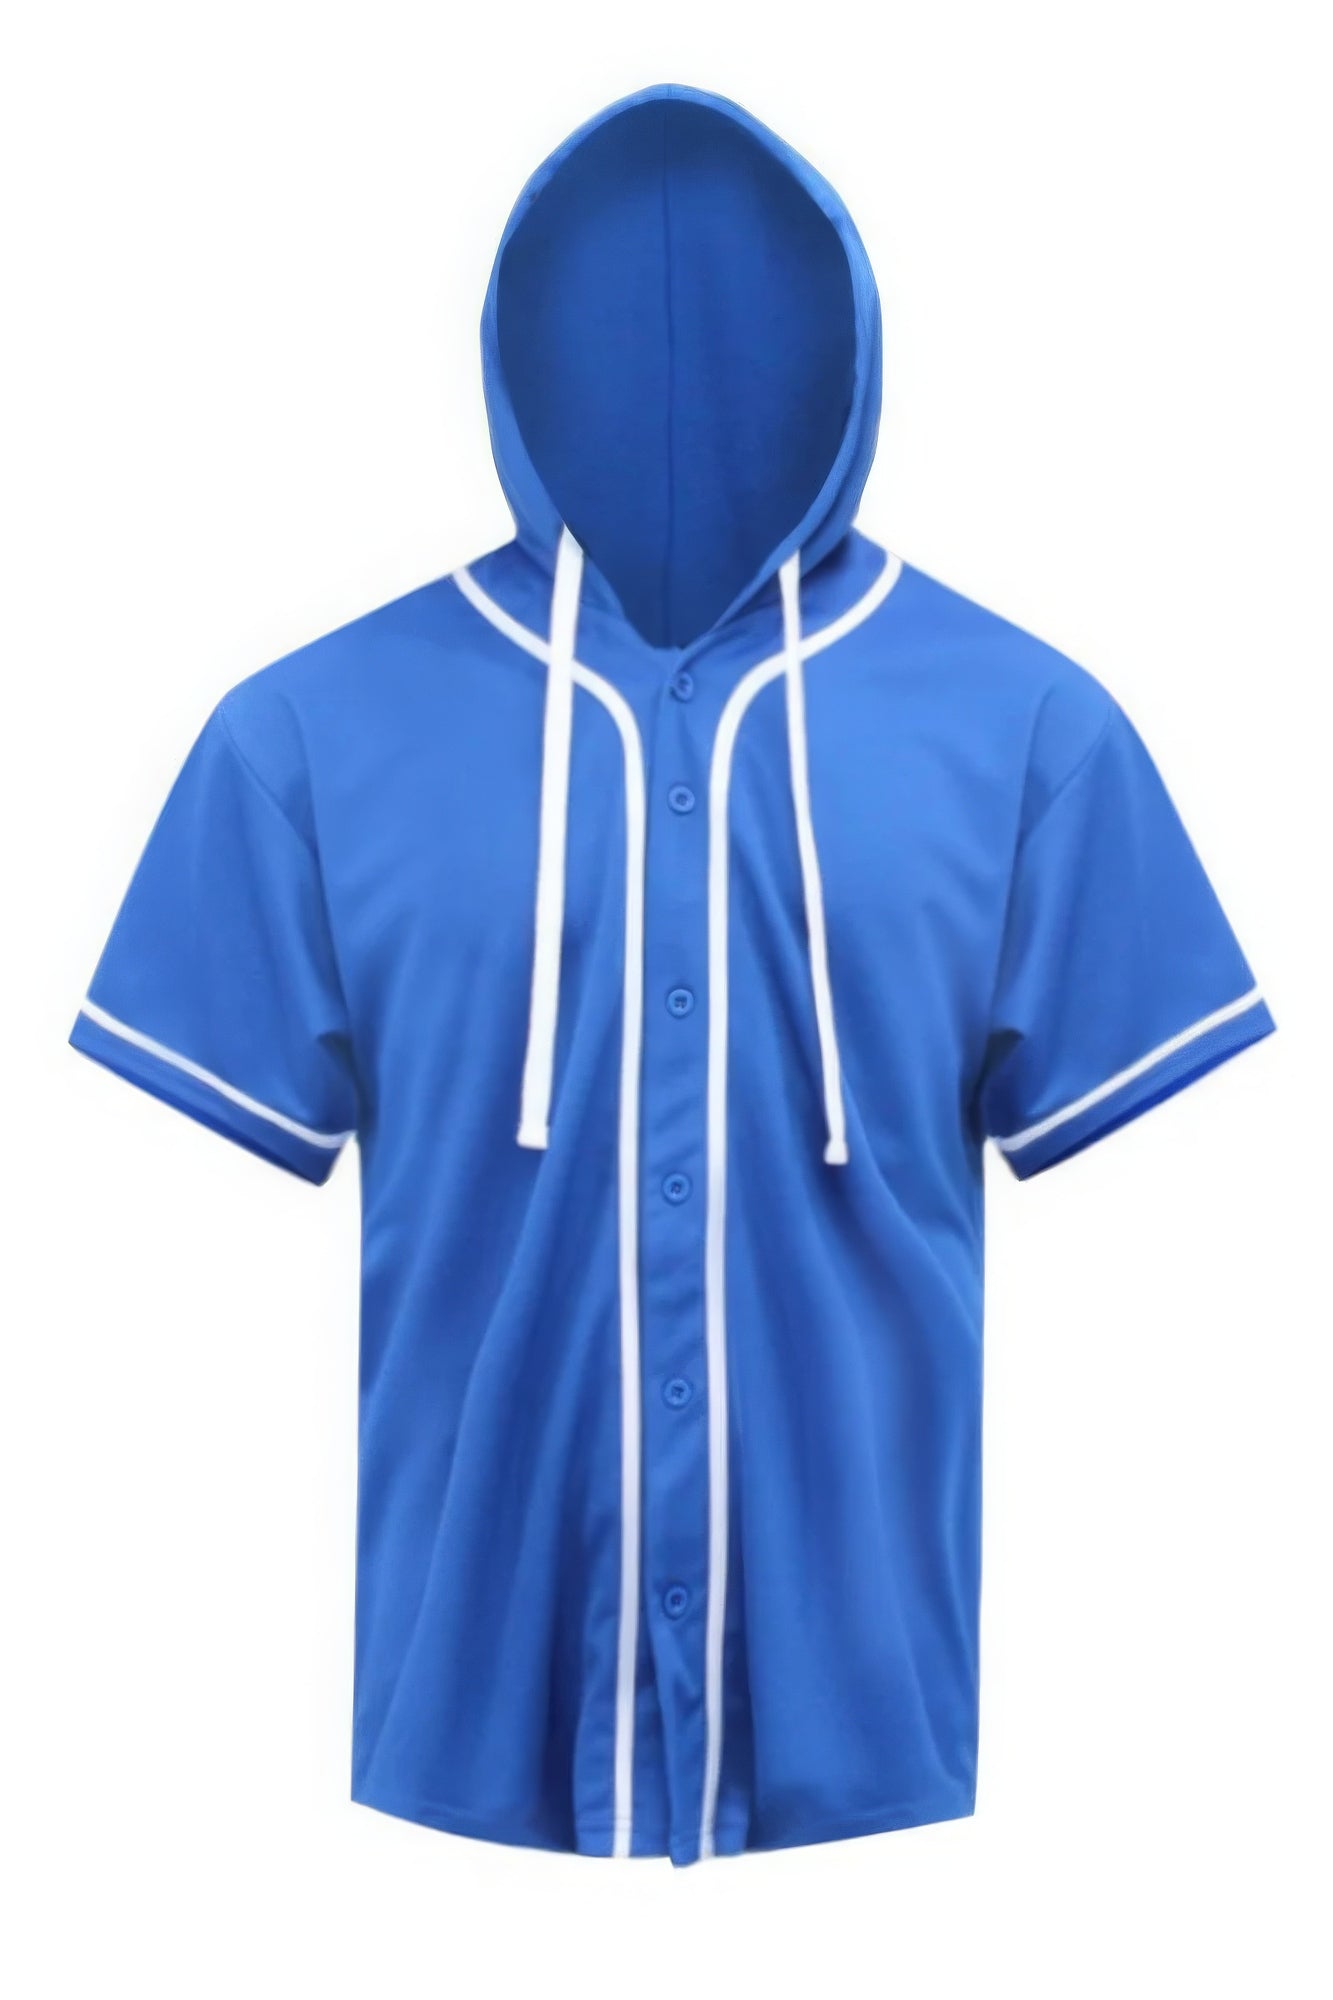 Hooded Baseball Jersey - Tigbuls Variety Fashion